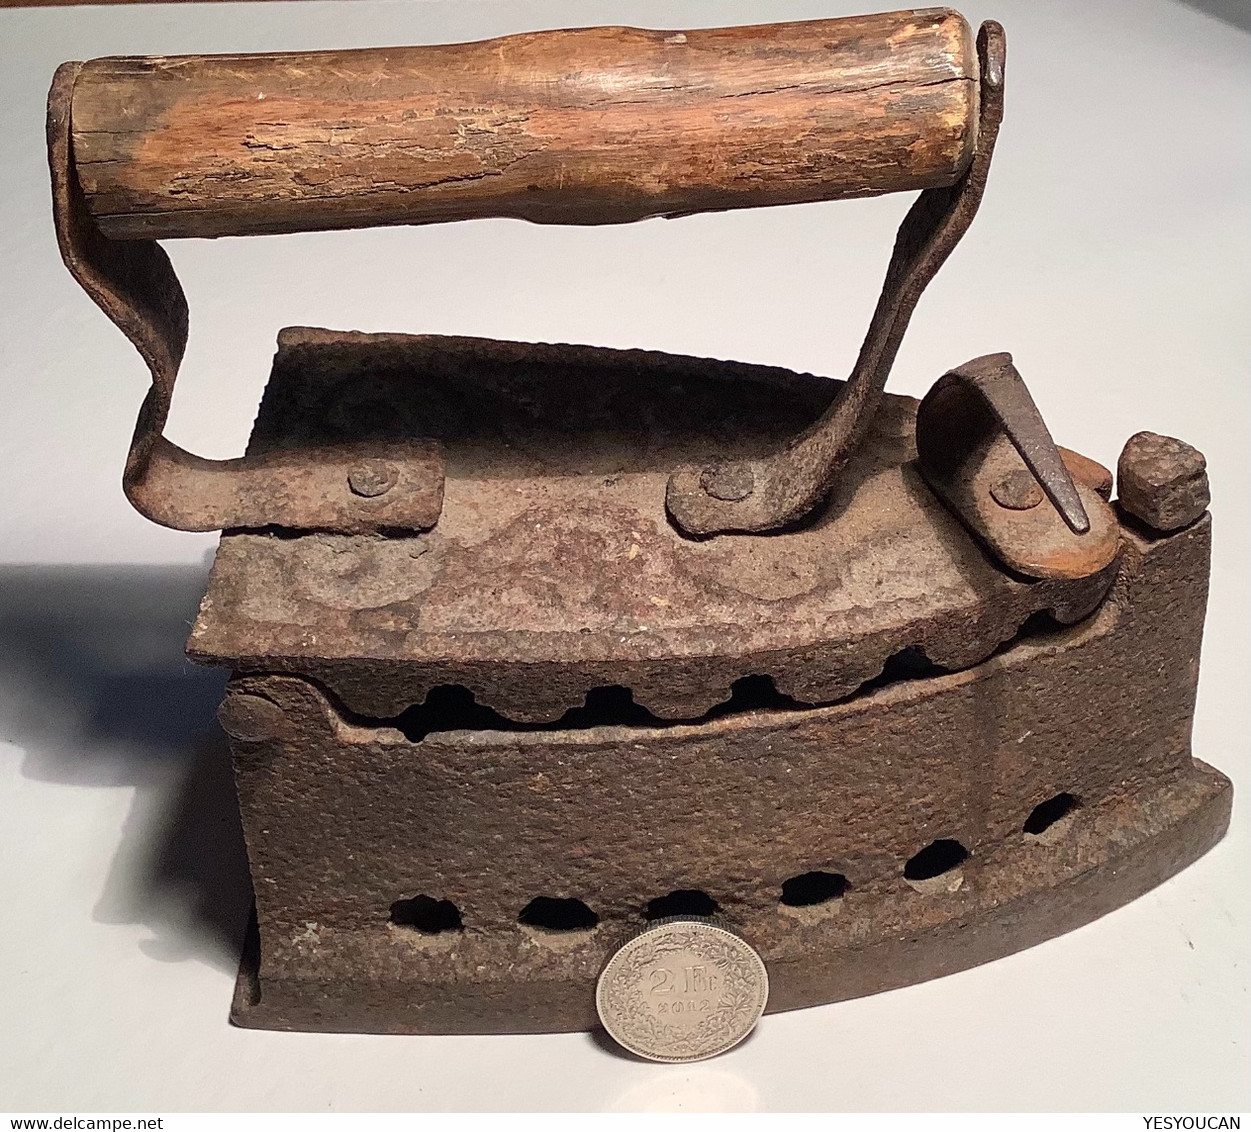 1800-1850 Ancien Fer à Repasser à Braise Bursins Vaud Suisse (Antik Bügeleisen Schweiz Antique Charcoal Iron Switzerland - Popular Art